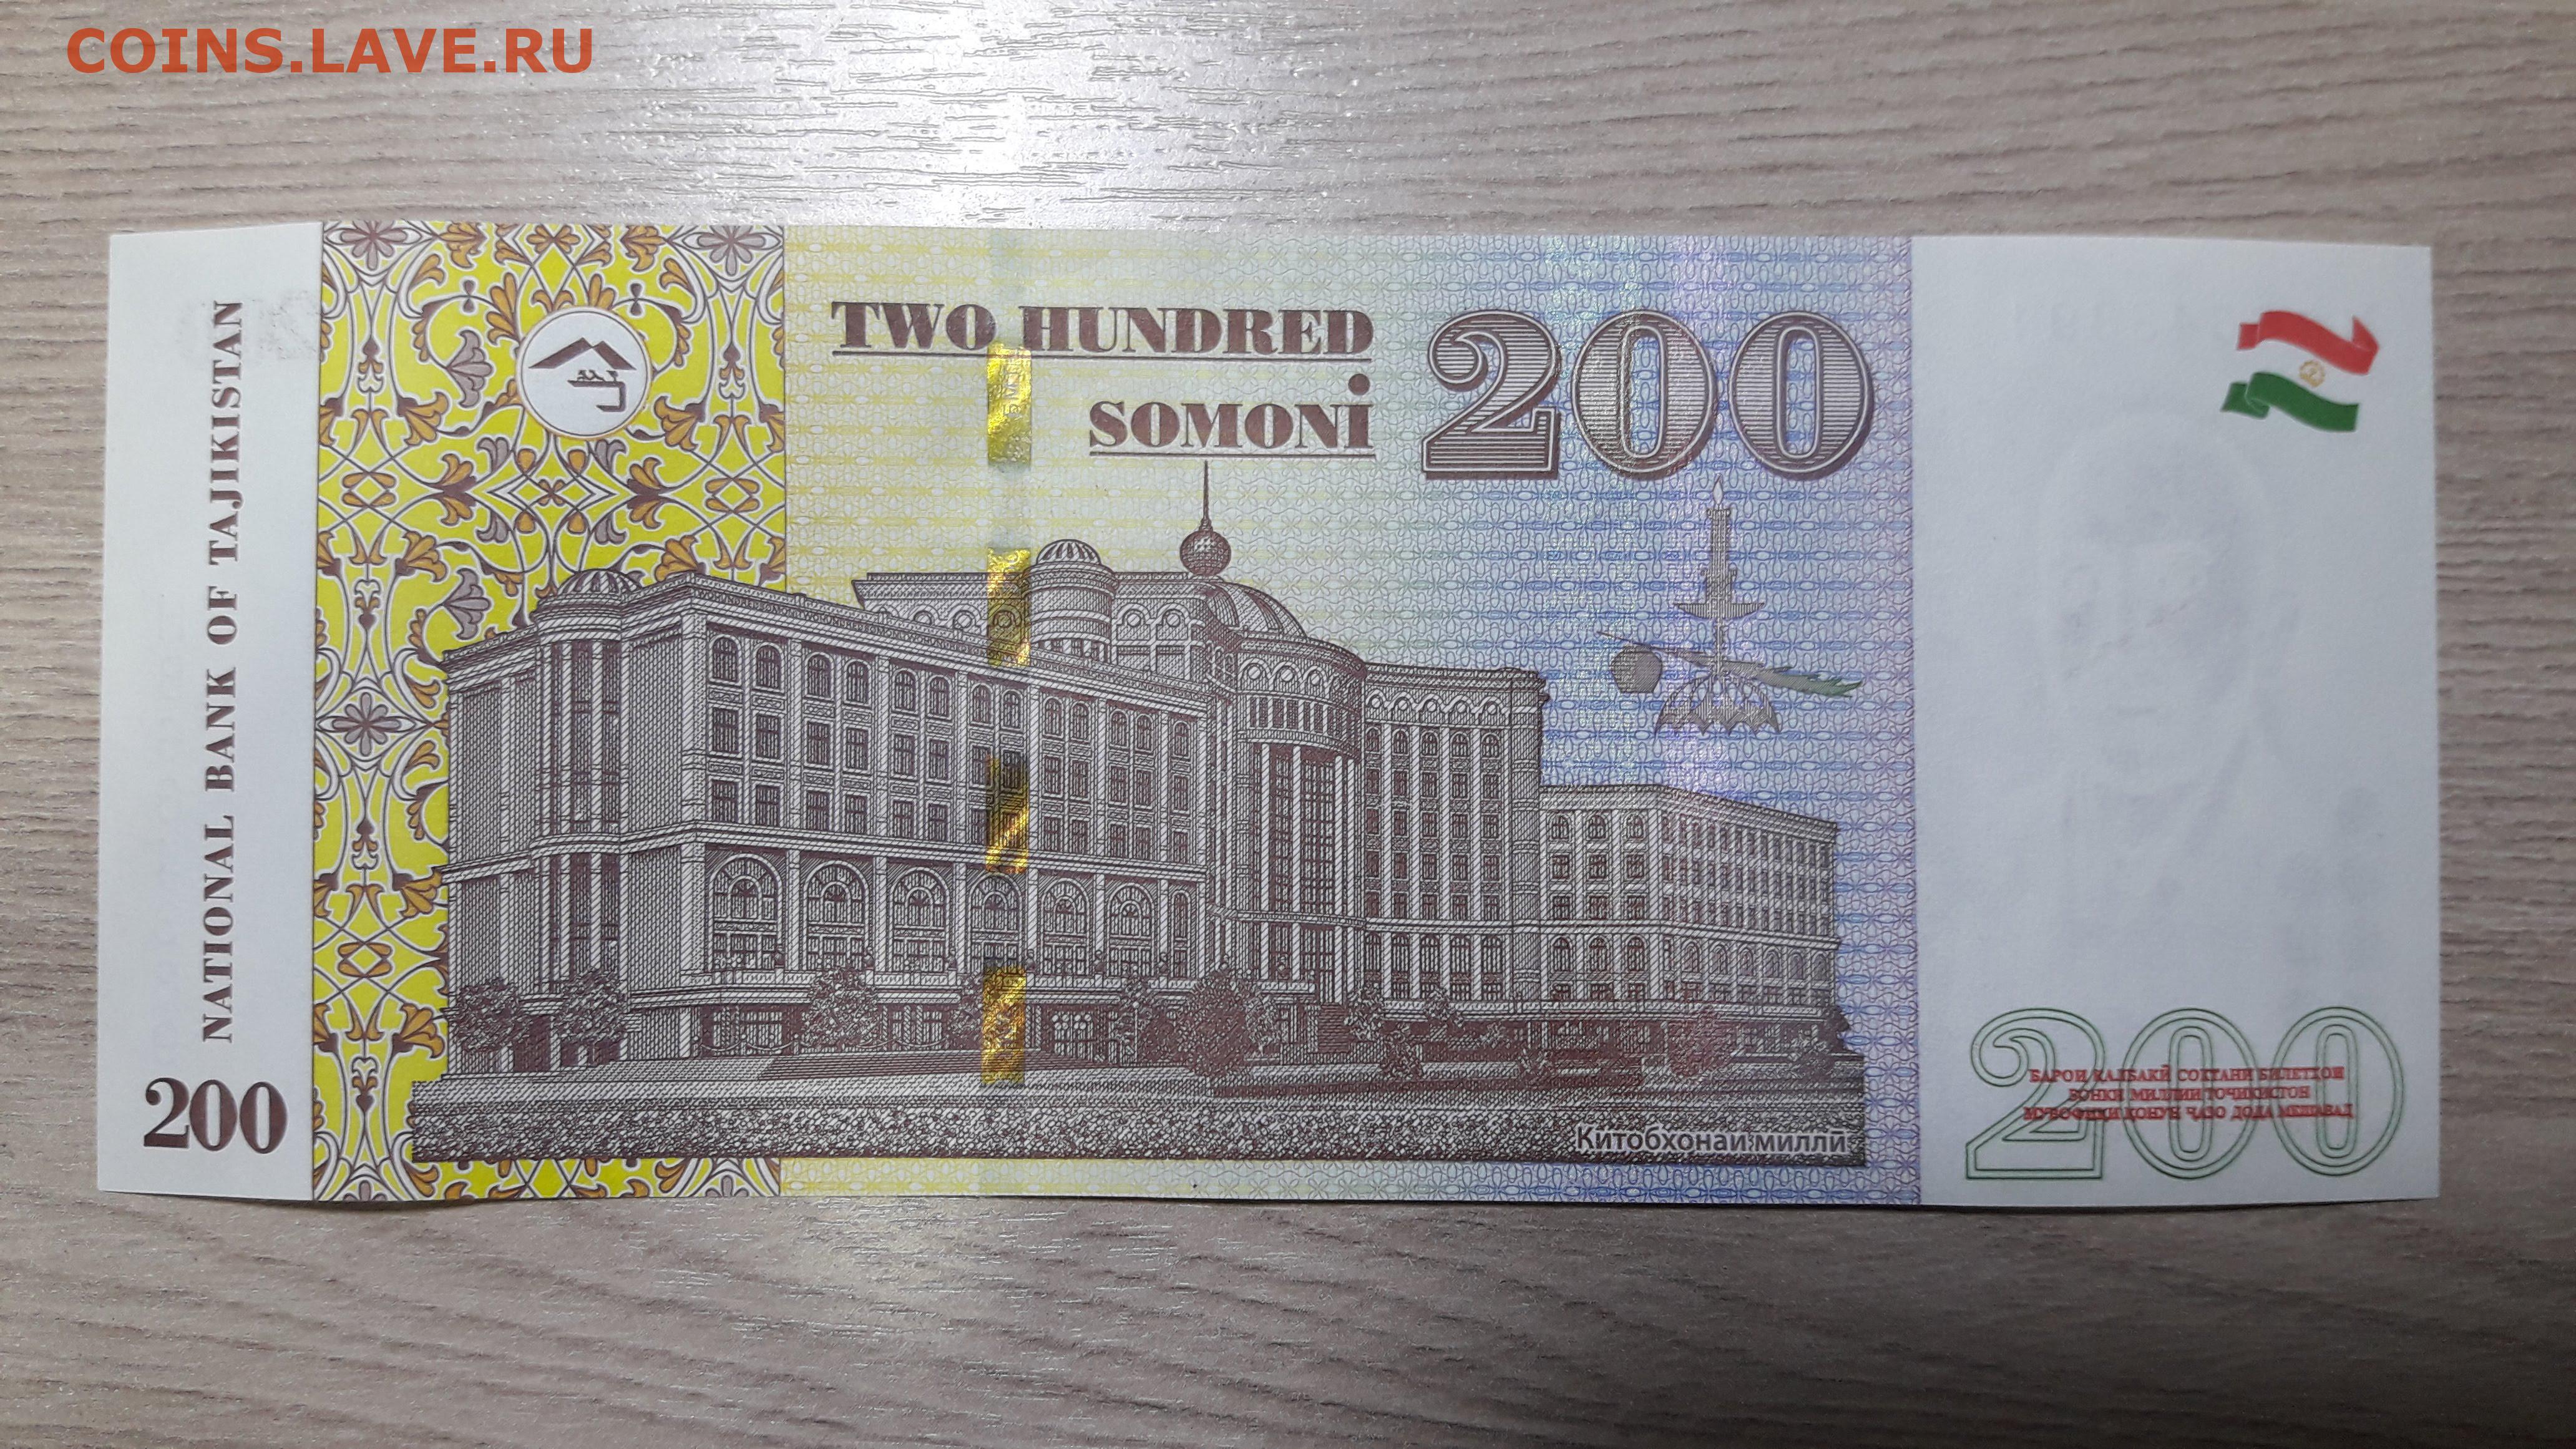 500000 рублей в таджикских сомони. 200 Сомони. Купюра Сомони. Деньги Таджикистана. Купюра 10 Сомони.